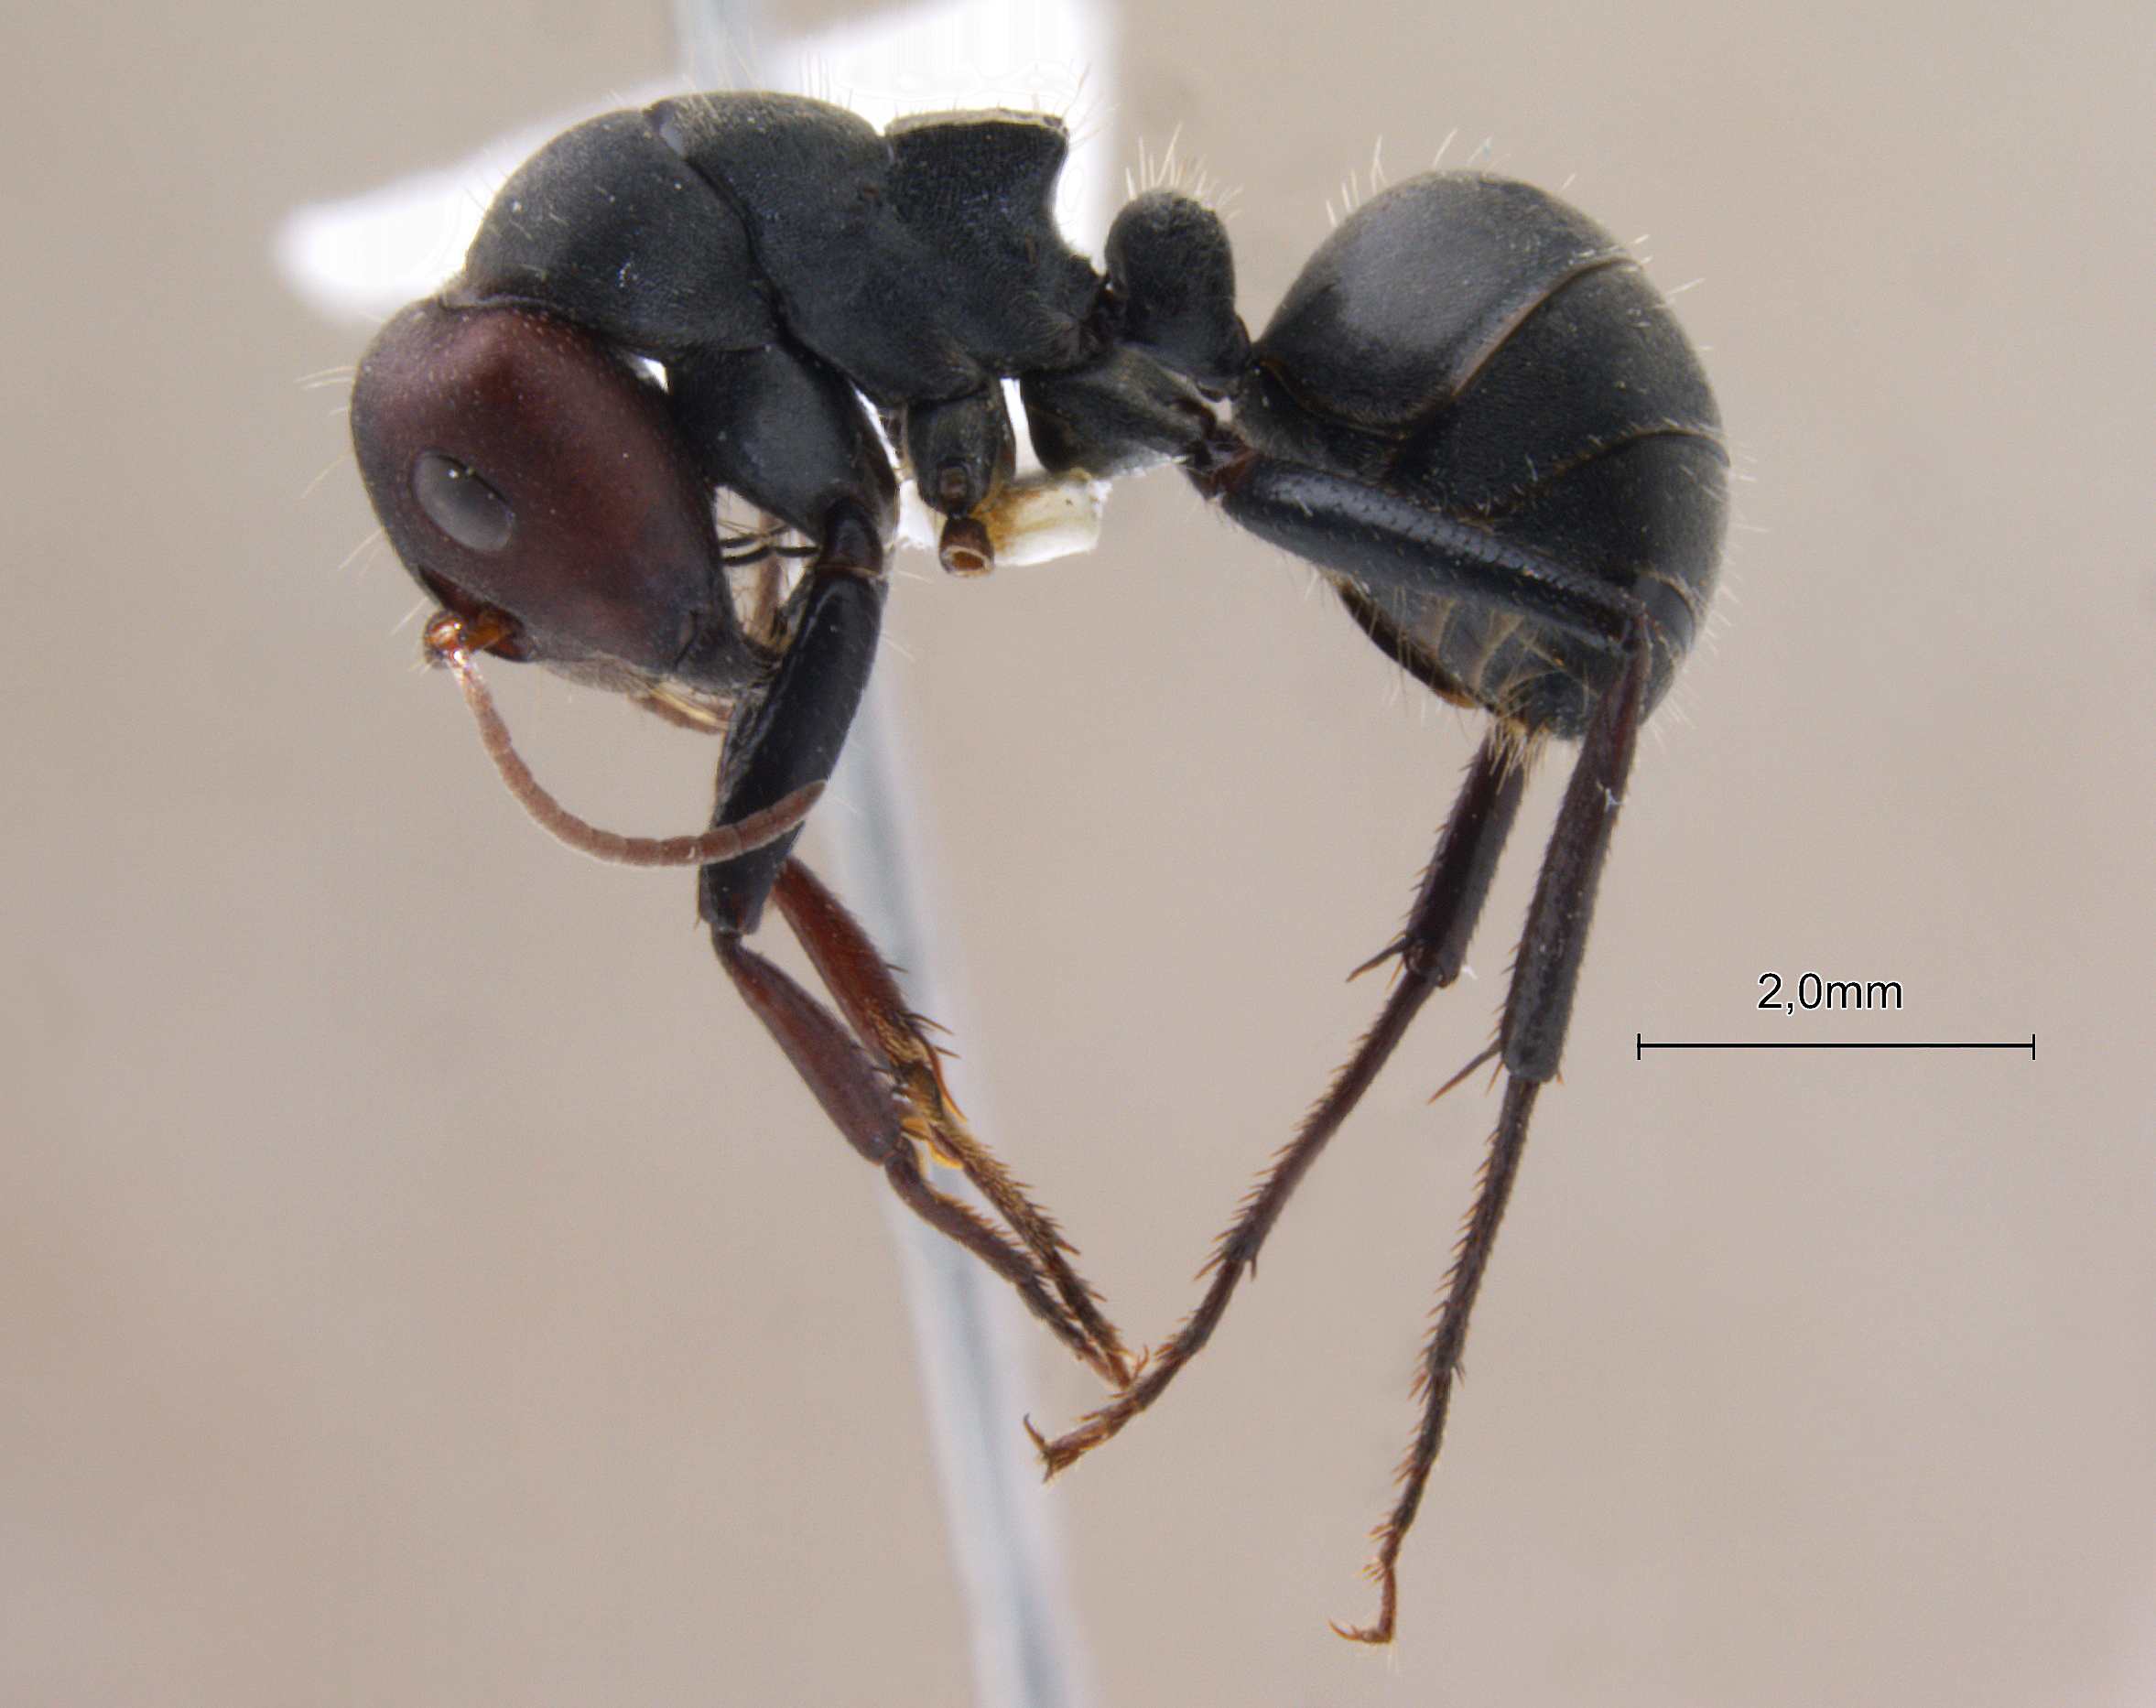 Camponotus opaciventris lateral